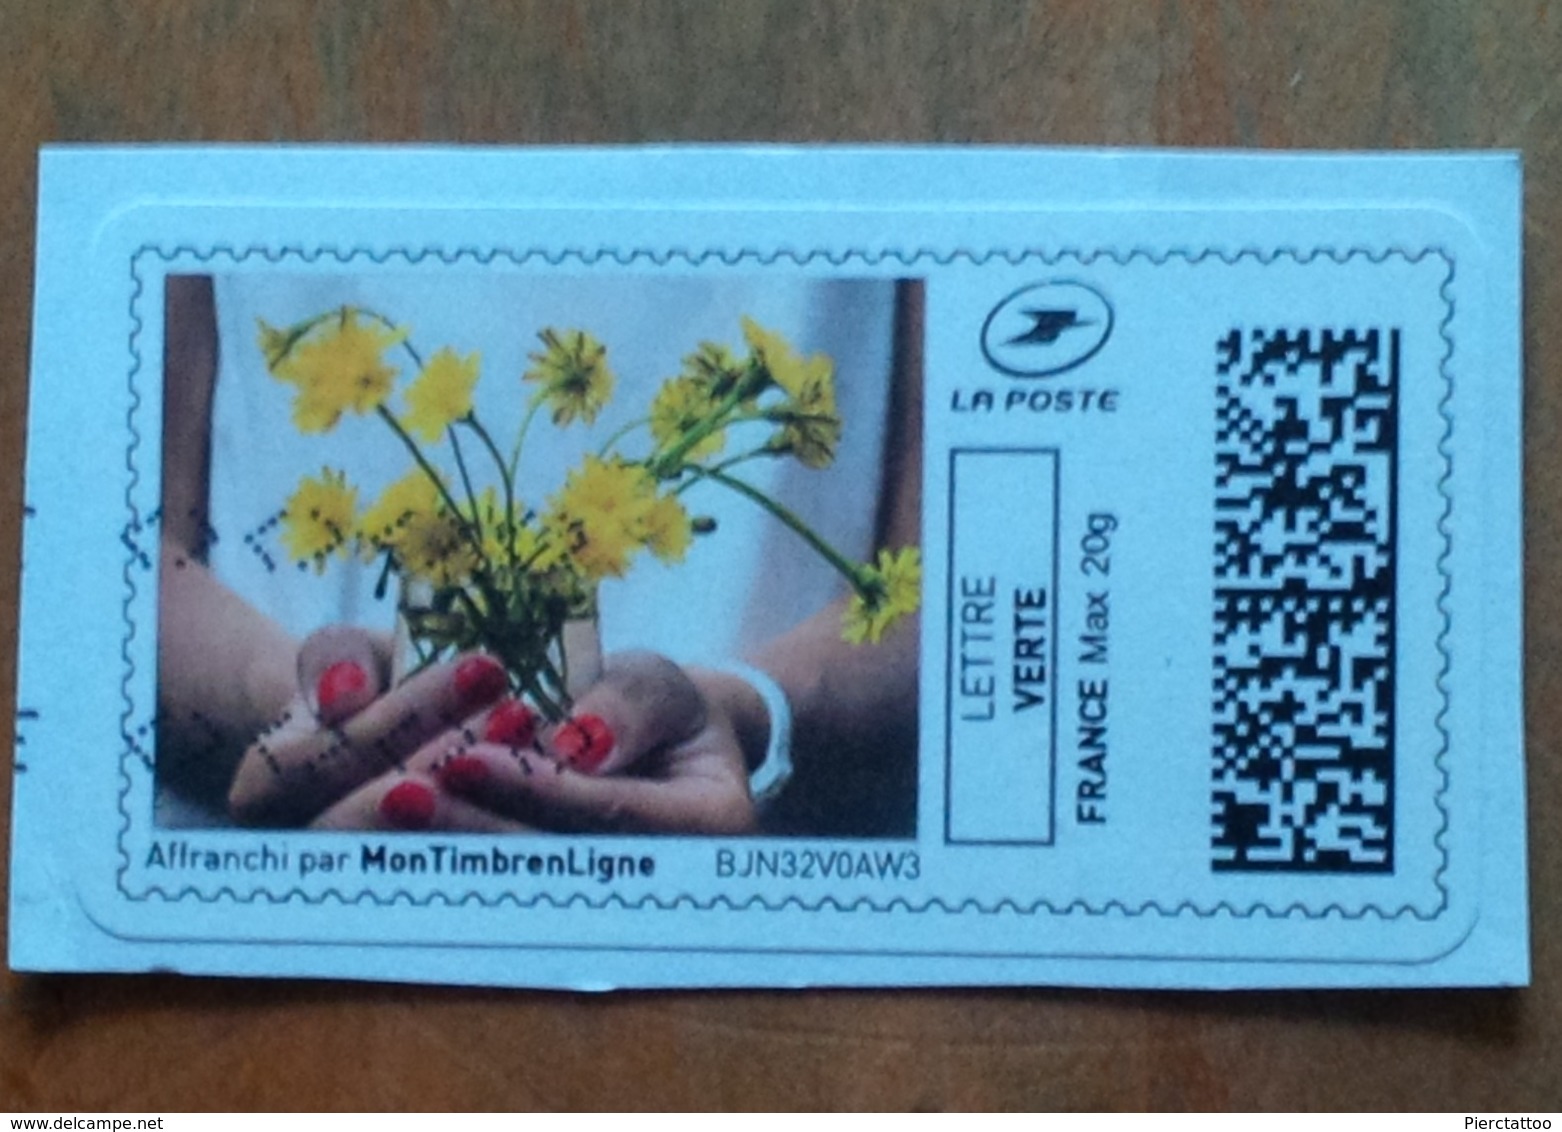 Timbre En Ligne "Fleurs" (Lettre Verte) - France - Timbres à Imprimer (Montimbrenligne)